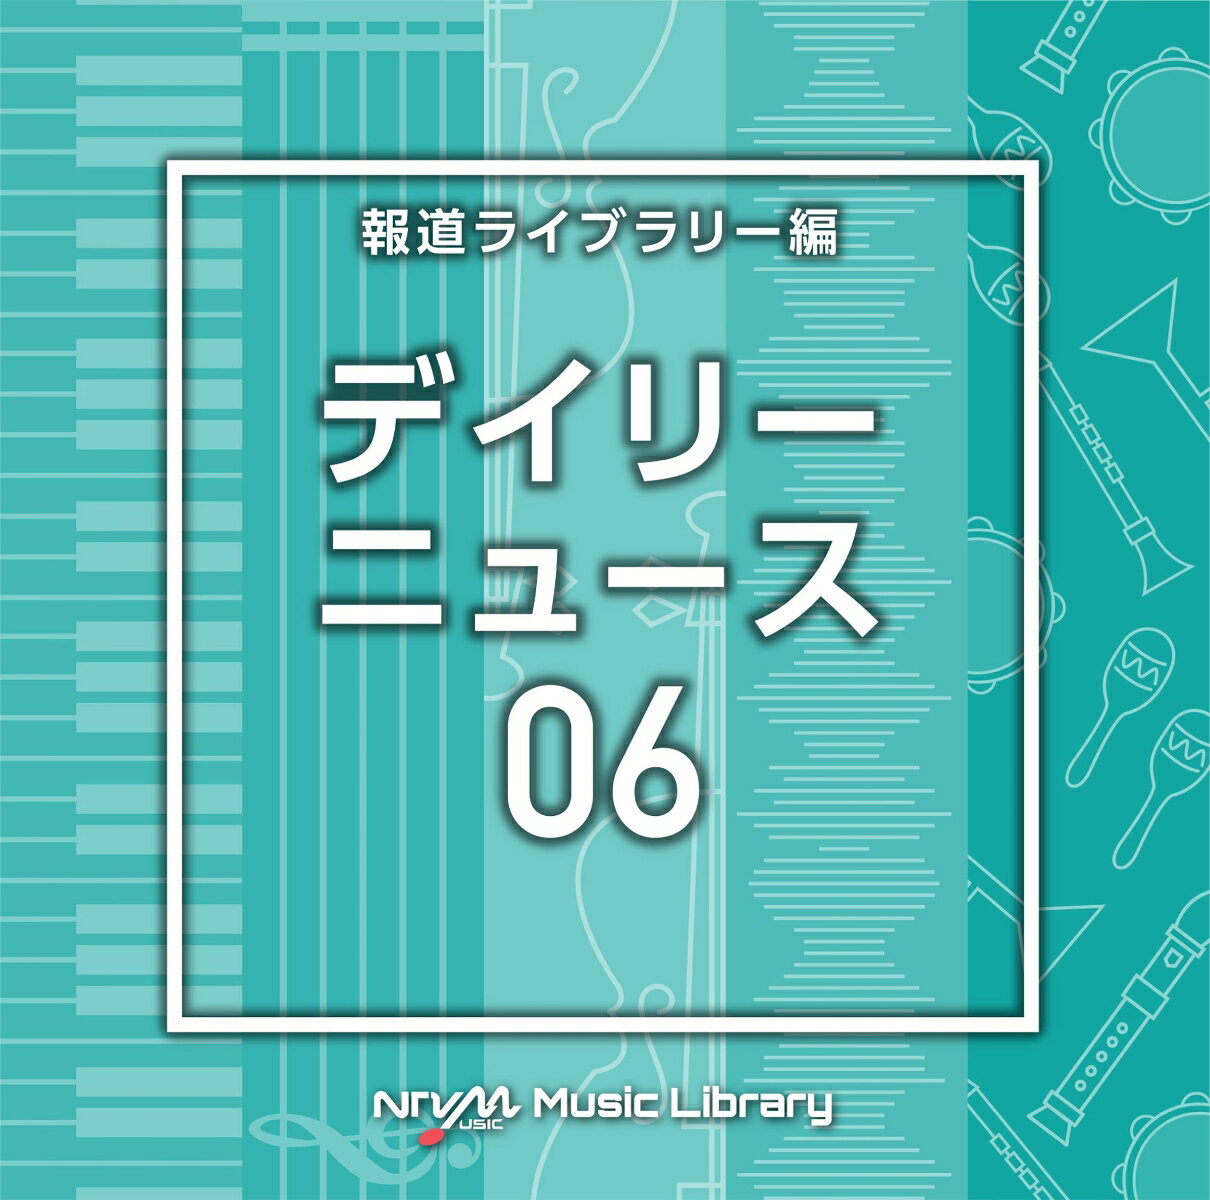 NTVM Music Library 報道ライブラリー編 デイリーニュース06